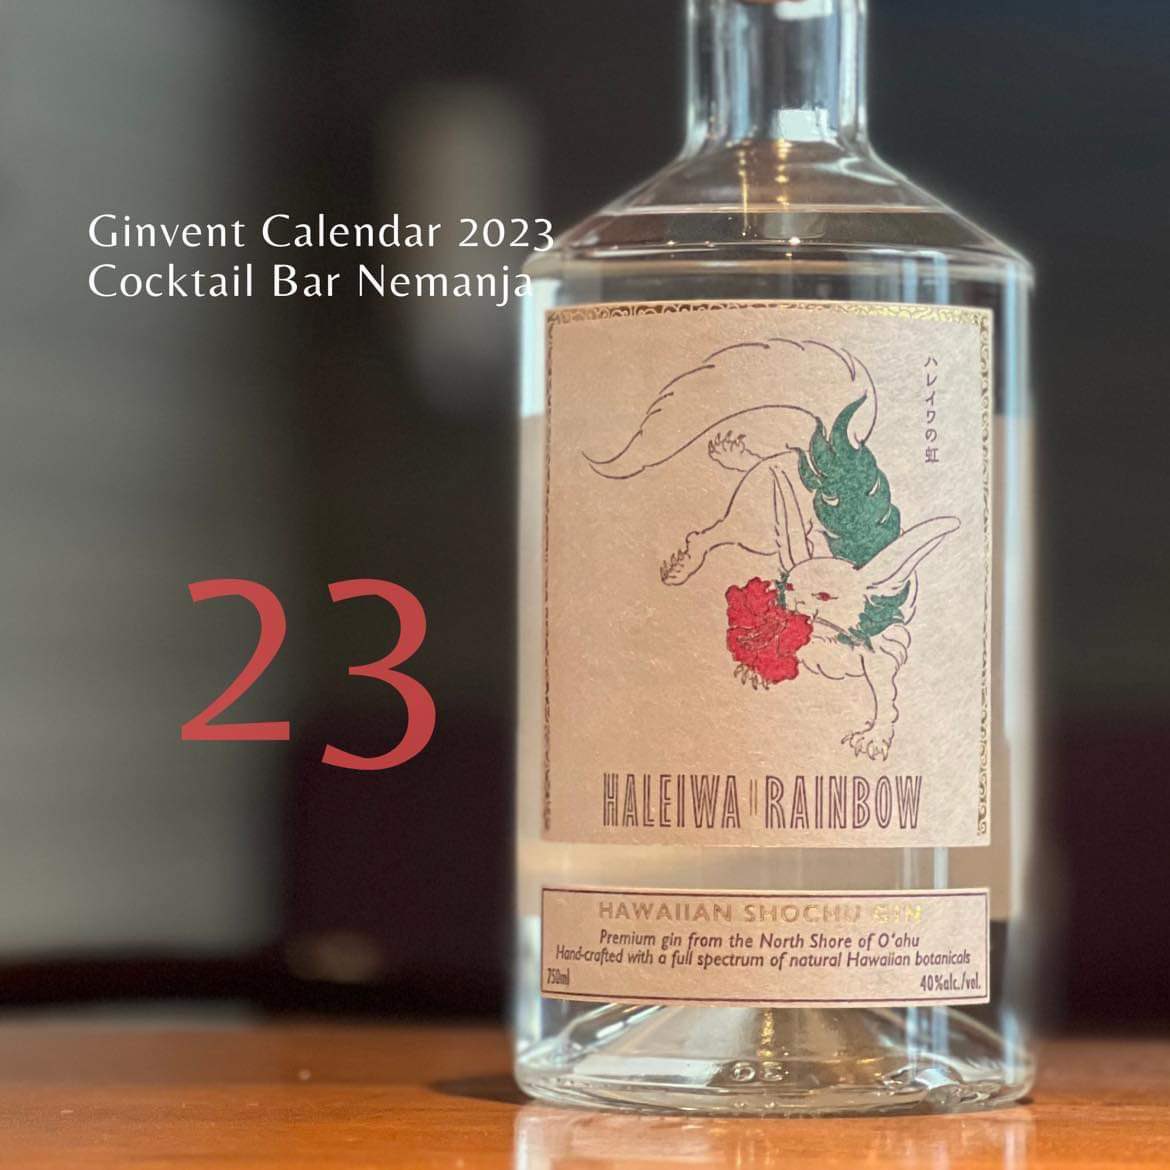 Ginvent Calendar 2023
Cocktail Bar Nemanja

ジンベントカレンダー2023
カクテルバー・ネマニャ